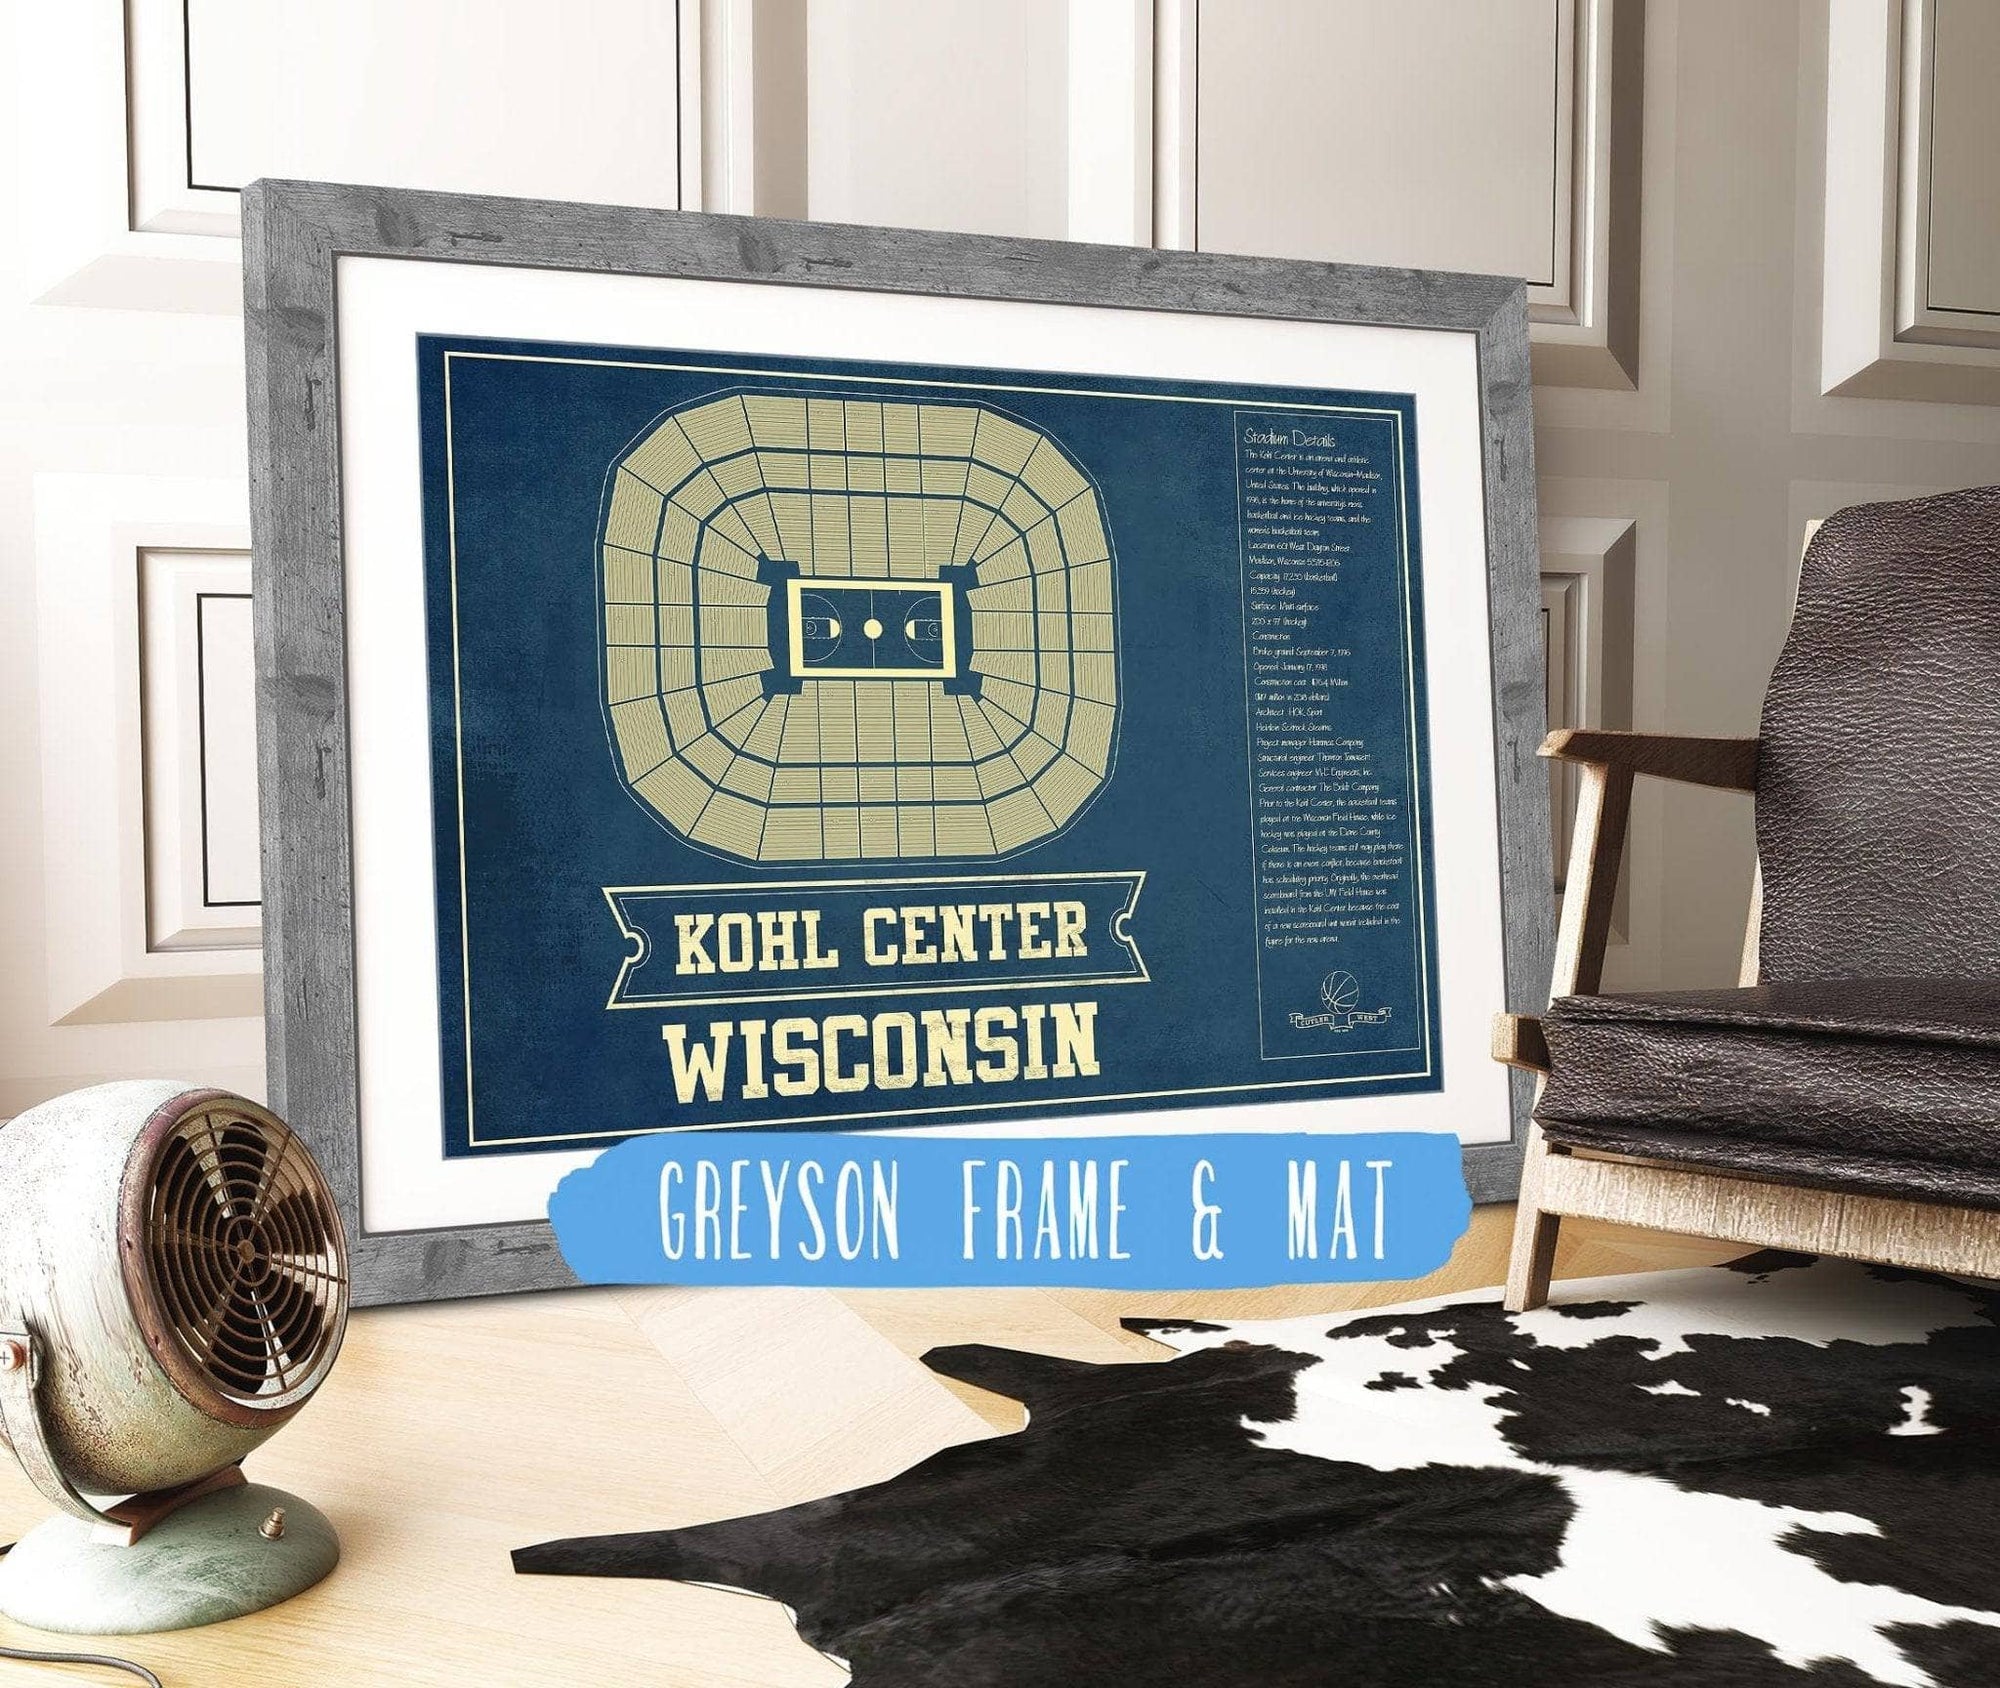 Cutler West 14" x 11" / Greyson Frame & Mat Wisconsin Badgers Wisconsin Kohl Center Seating Chart Vintage Art Print 93335020985216